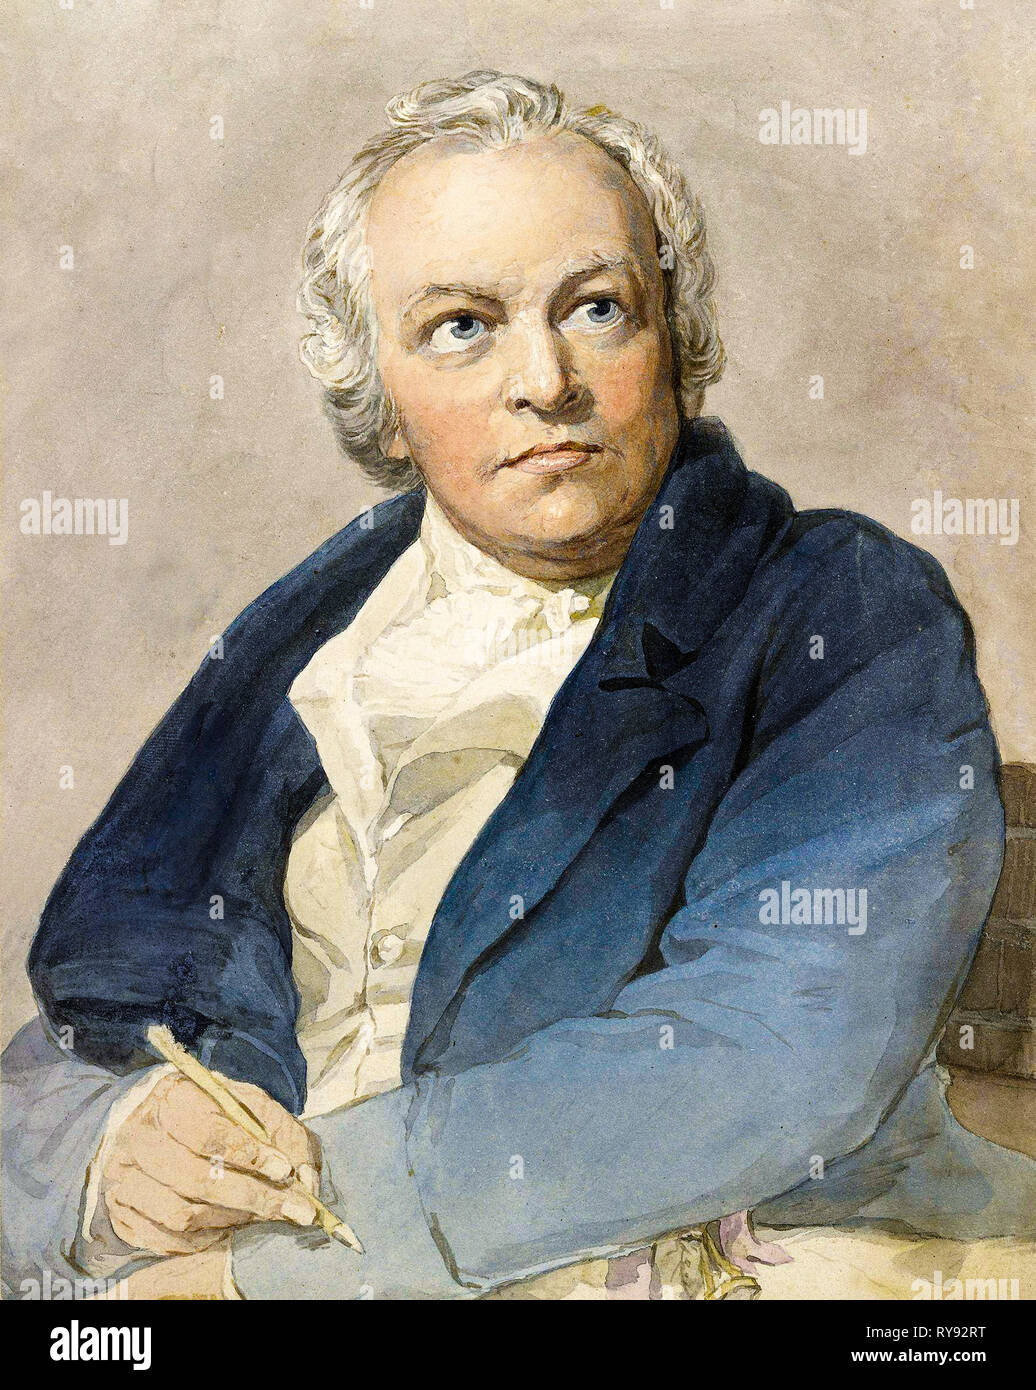 William Blake (1757-1827), portrait painting, 1807 by Thomas Phillips Stock Photo